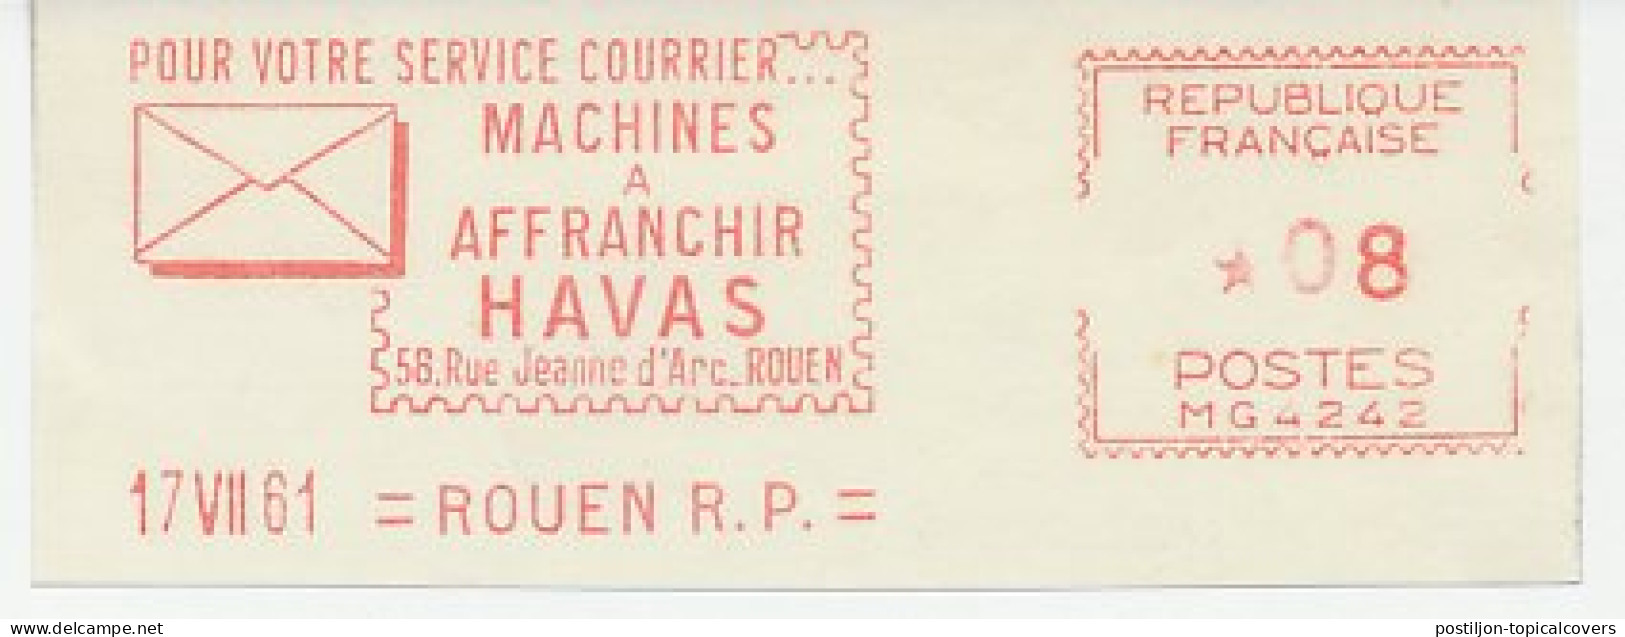 Meter Cut France 1961 Havas - Vignette [ATM]